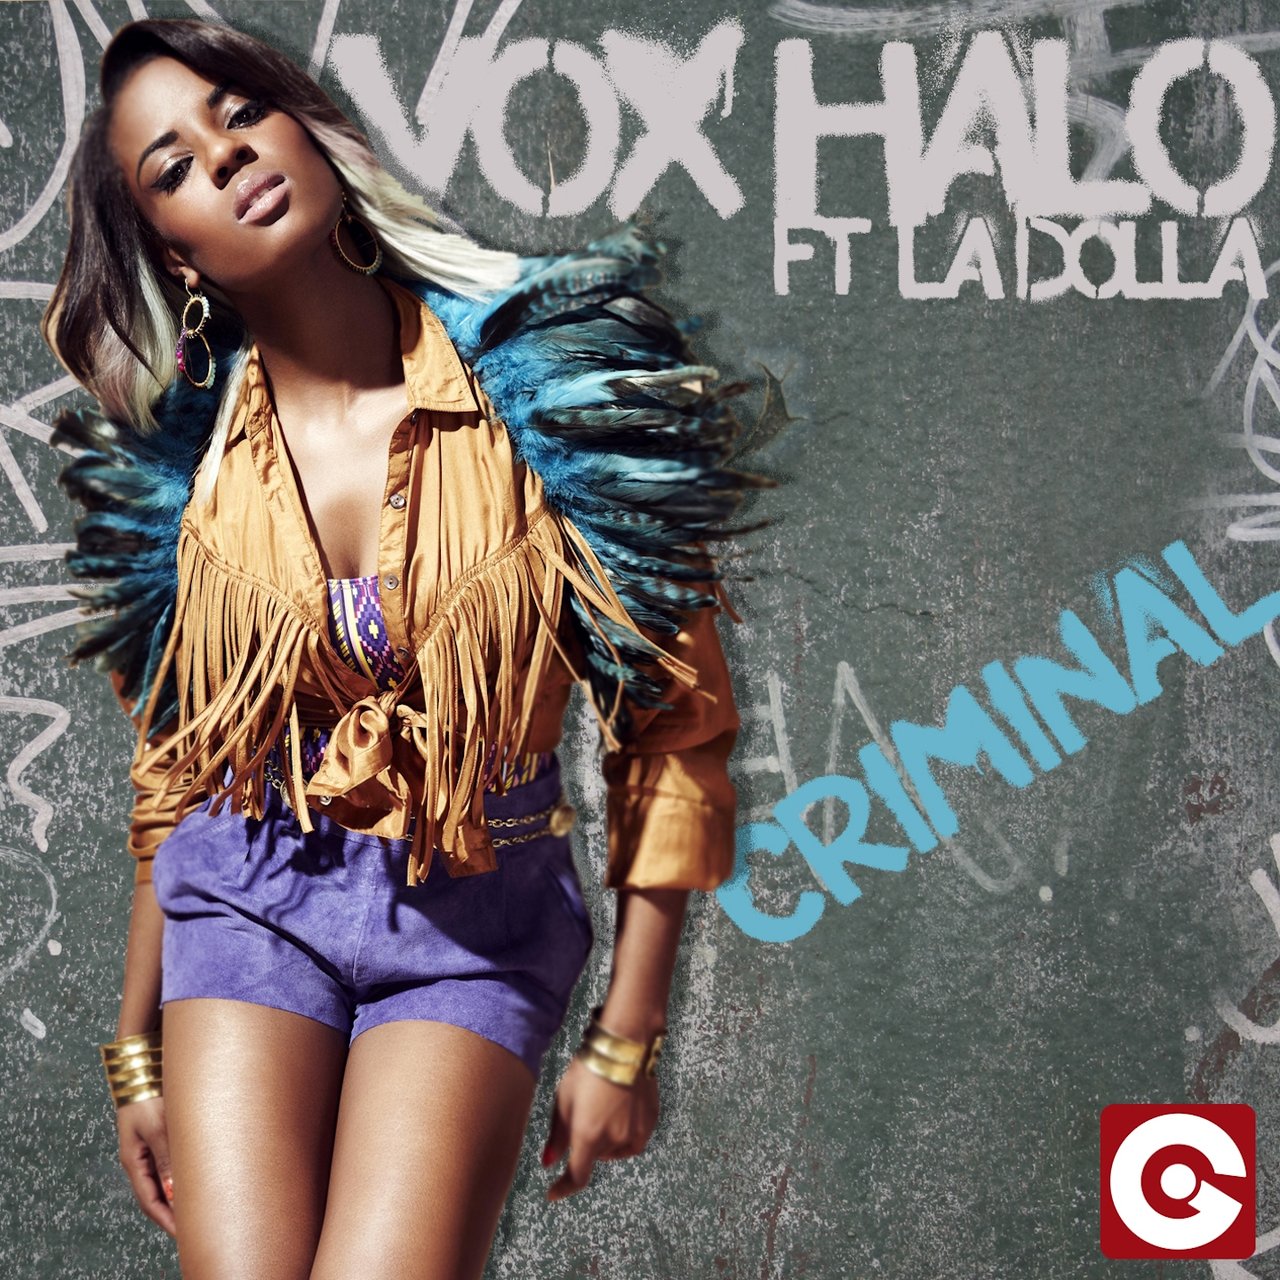 Vox Halo featuring LaDolla — Criminal cover artwork